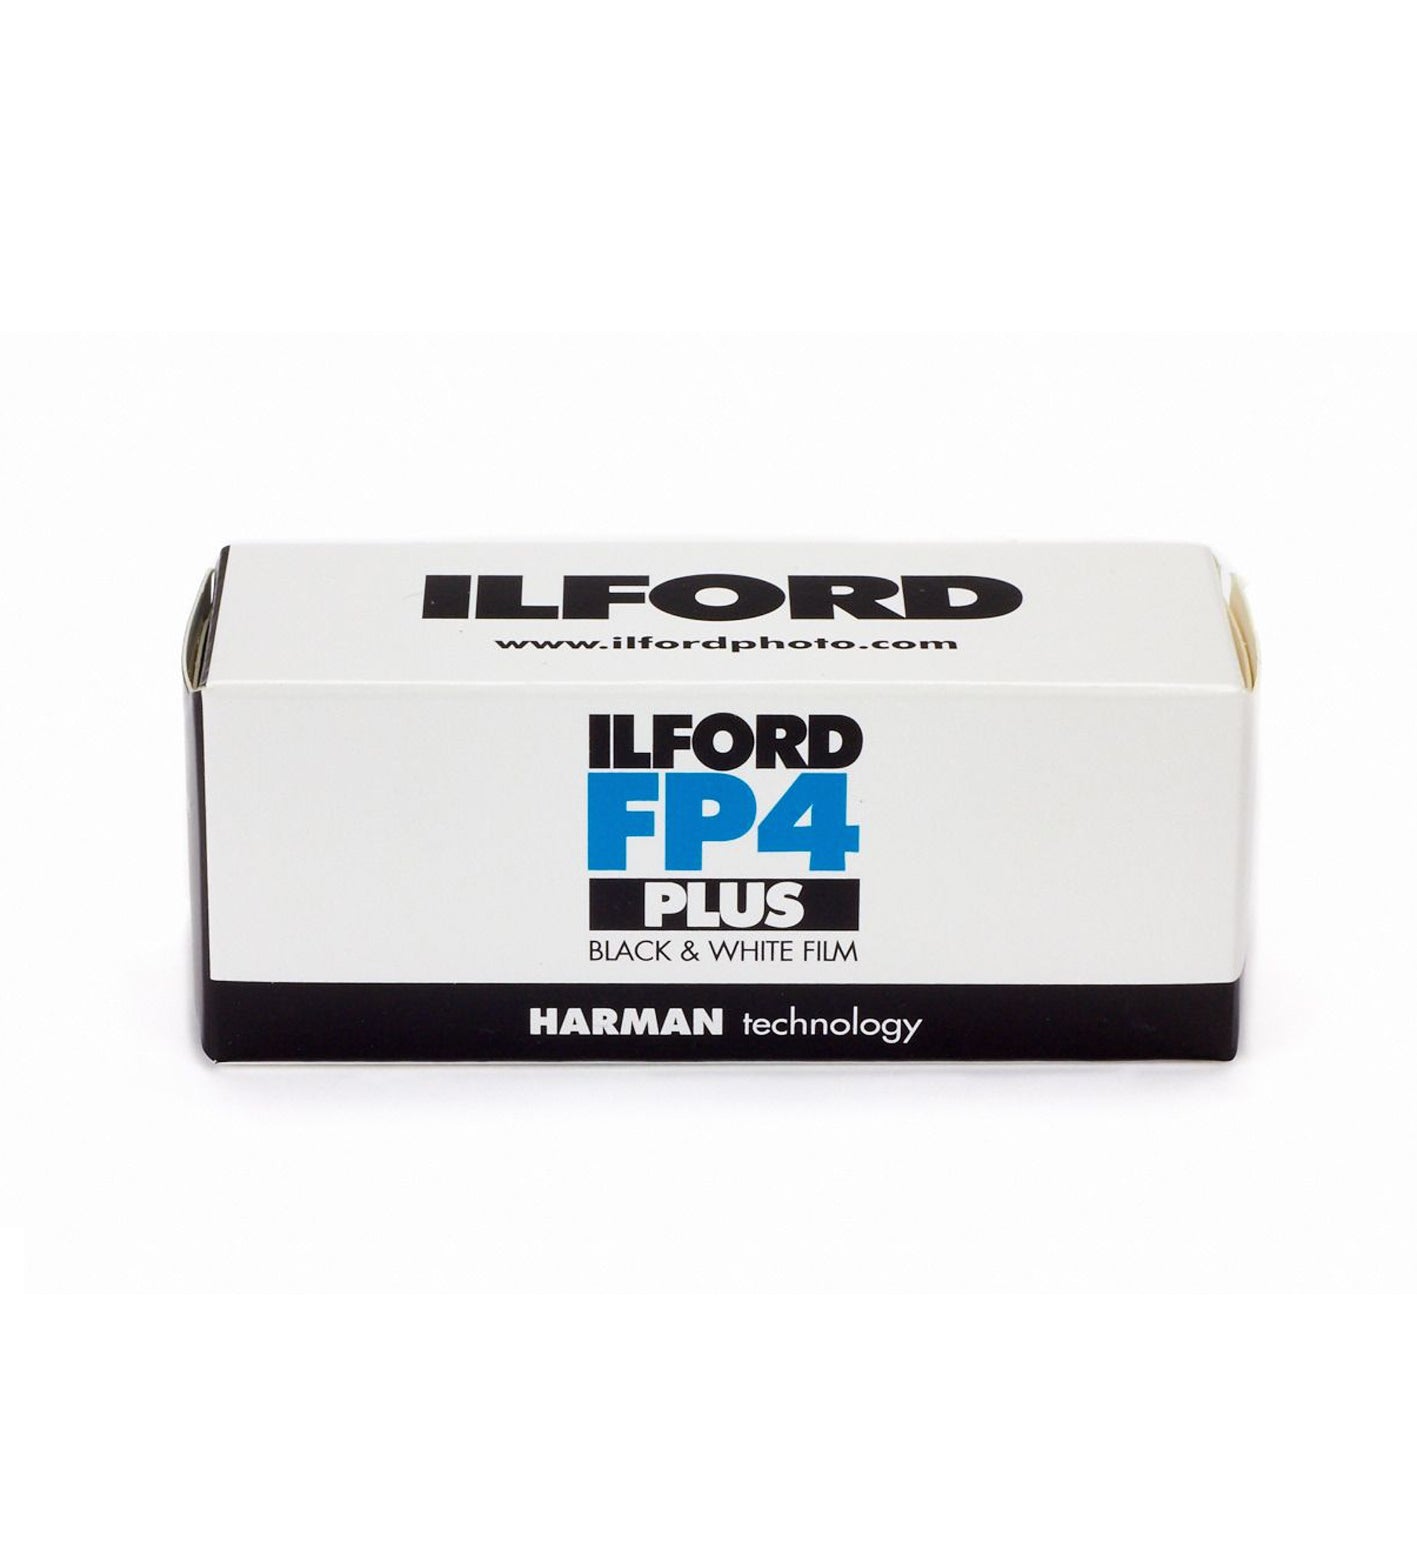 Ilford FP4 Plus 120 Film (£6.50 incl VAT)